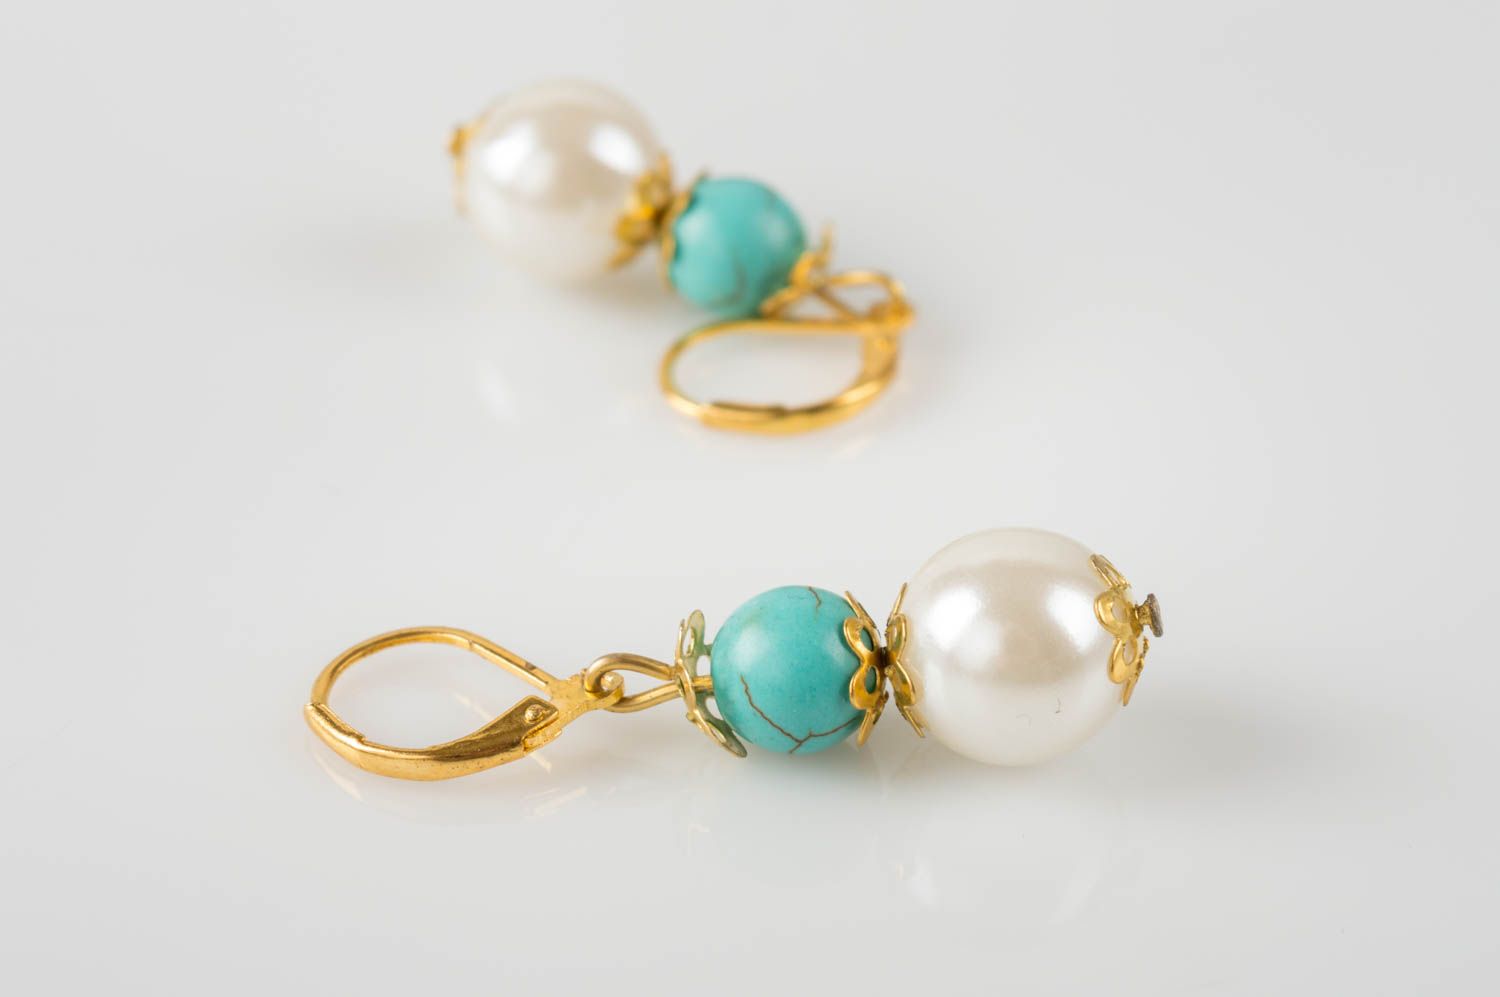 Handmade Ohrringe Gehänge Perlen Ohrhänger Modeschmuck Damen Geschenk für Frauen foto 4